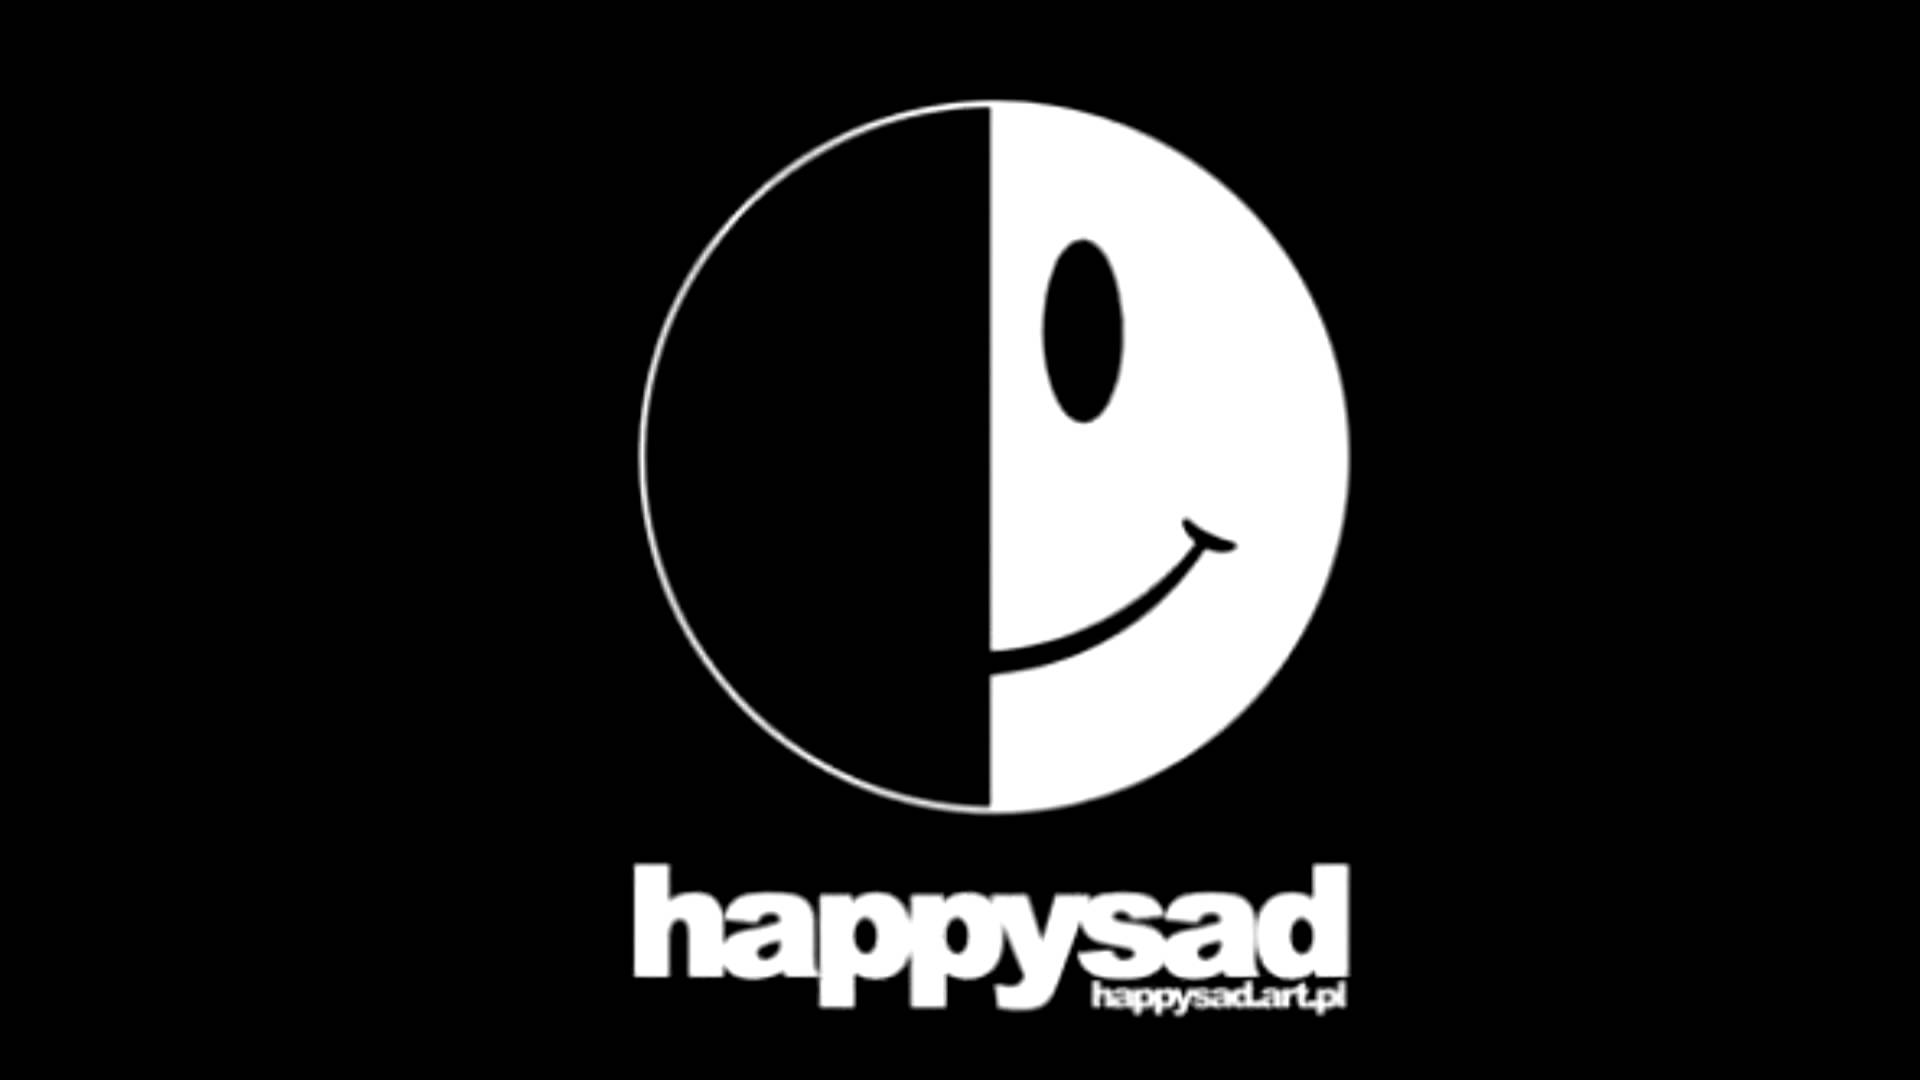 Free Happy Sad, Download Free